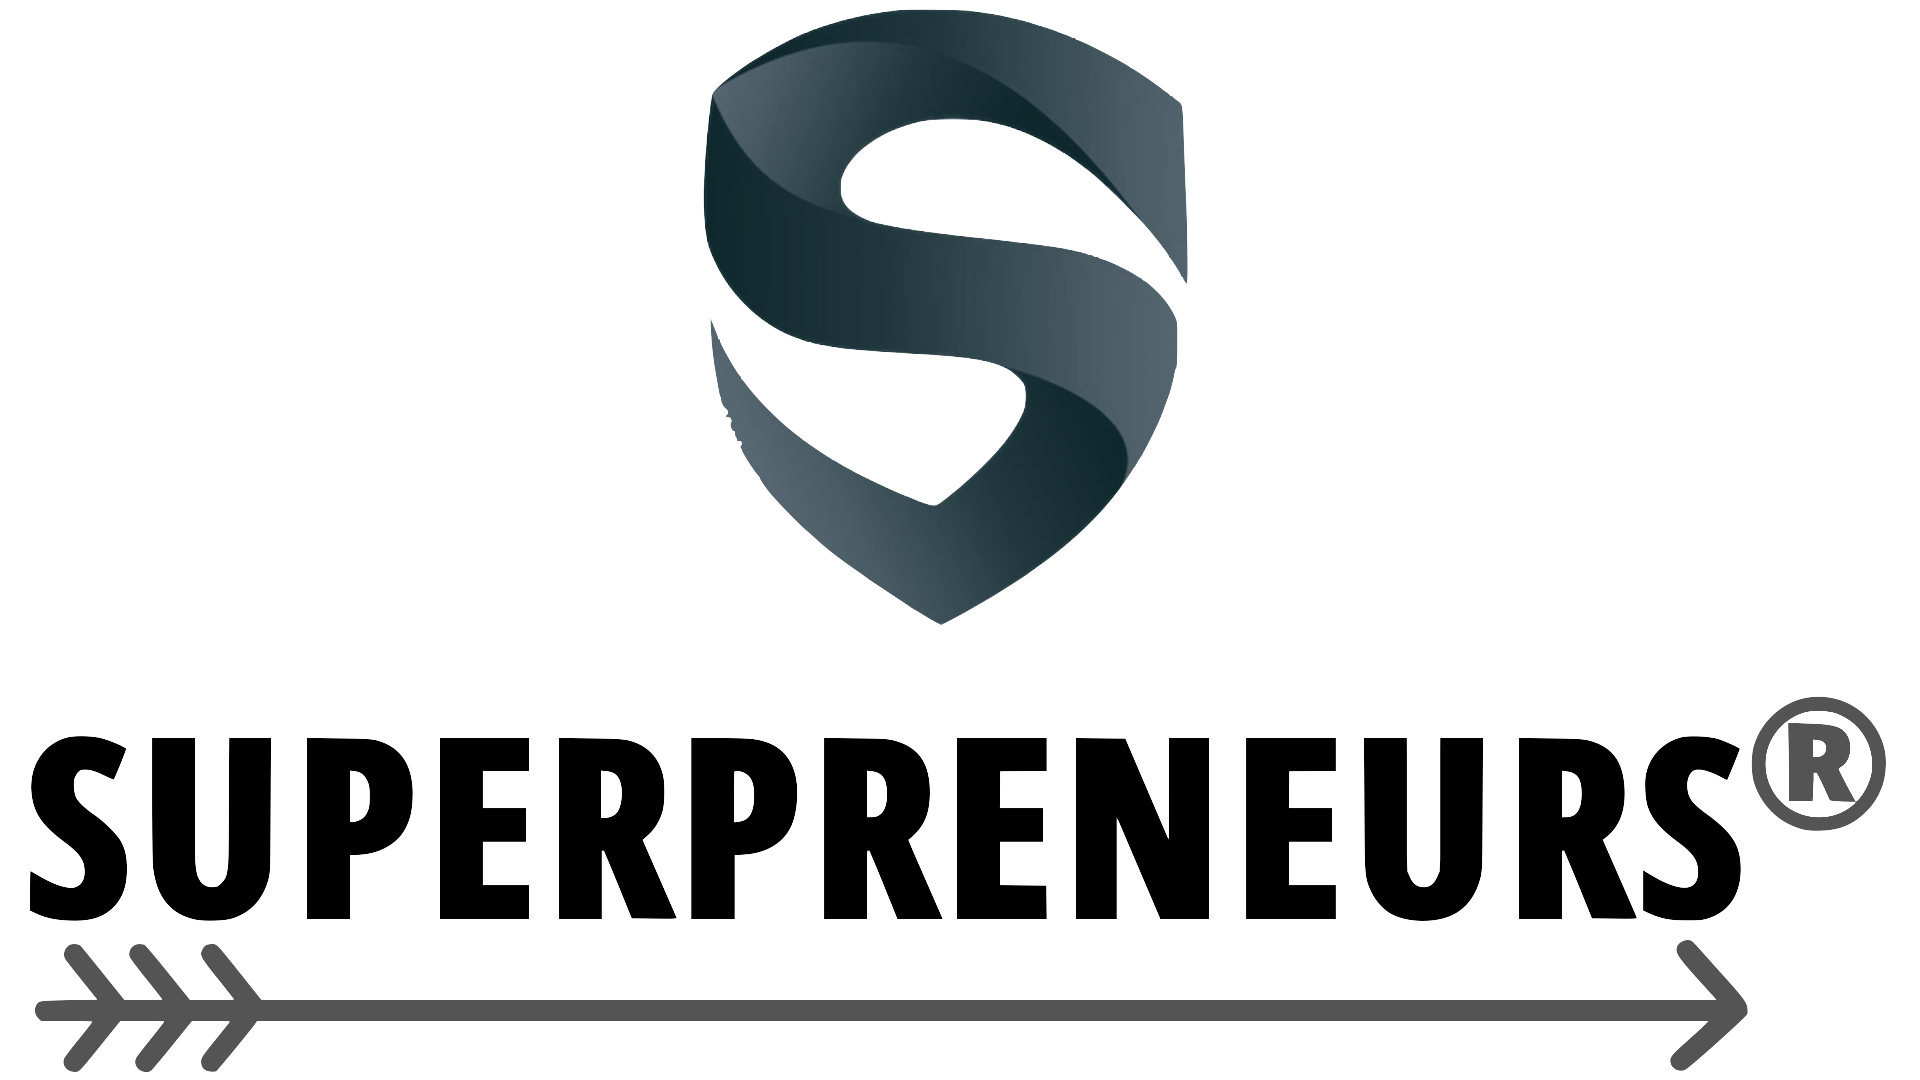 Superpreneurs (R) logo